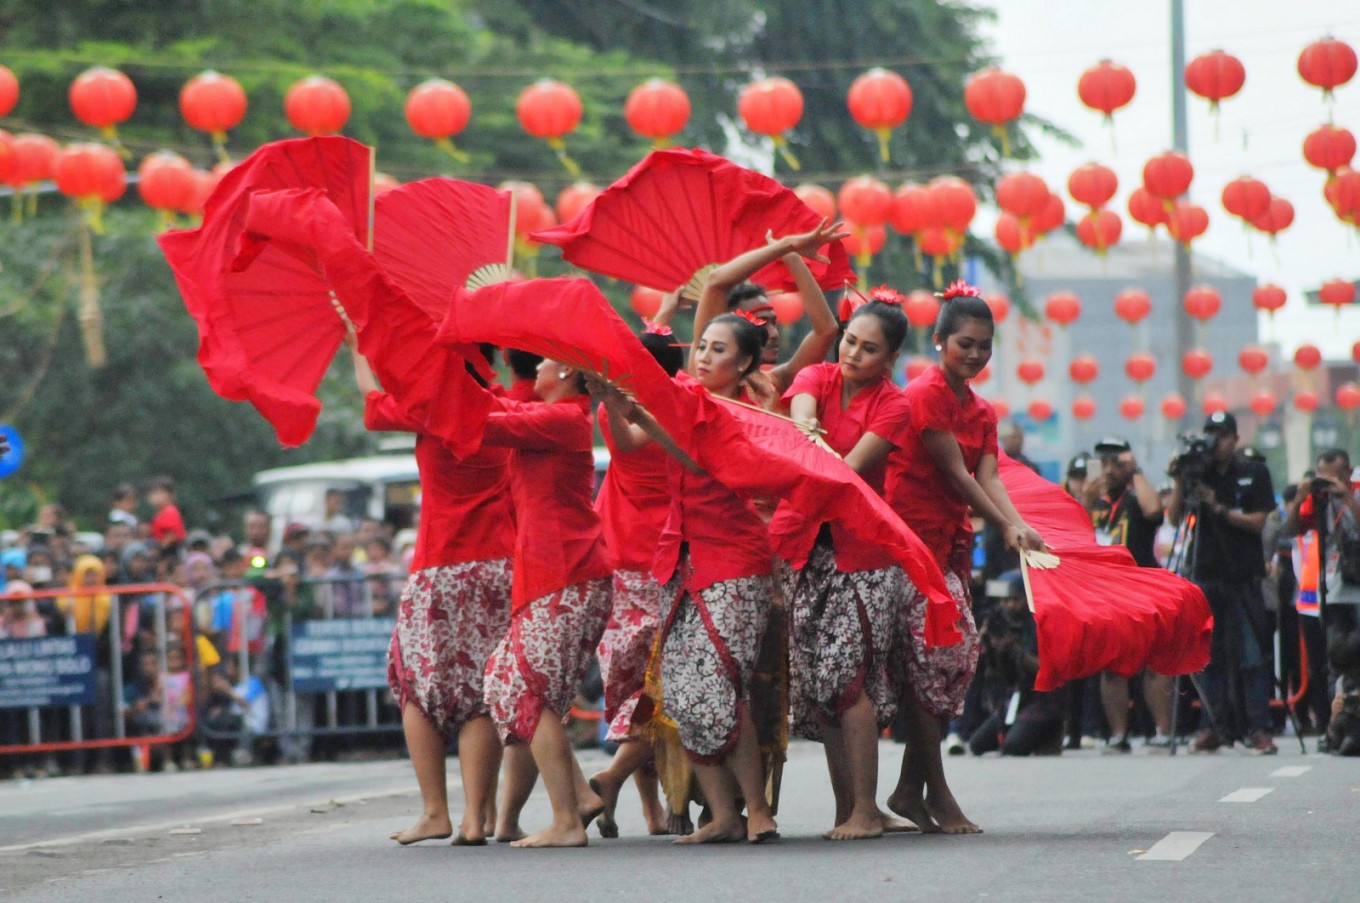 Boyong Kedhaton carnival marks Surakarta's 272nd anniversary